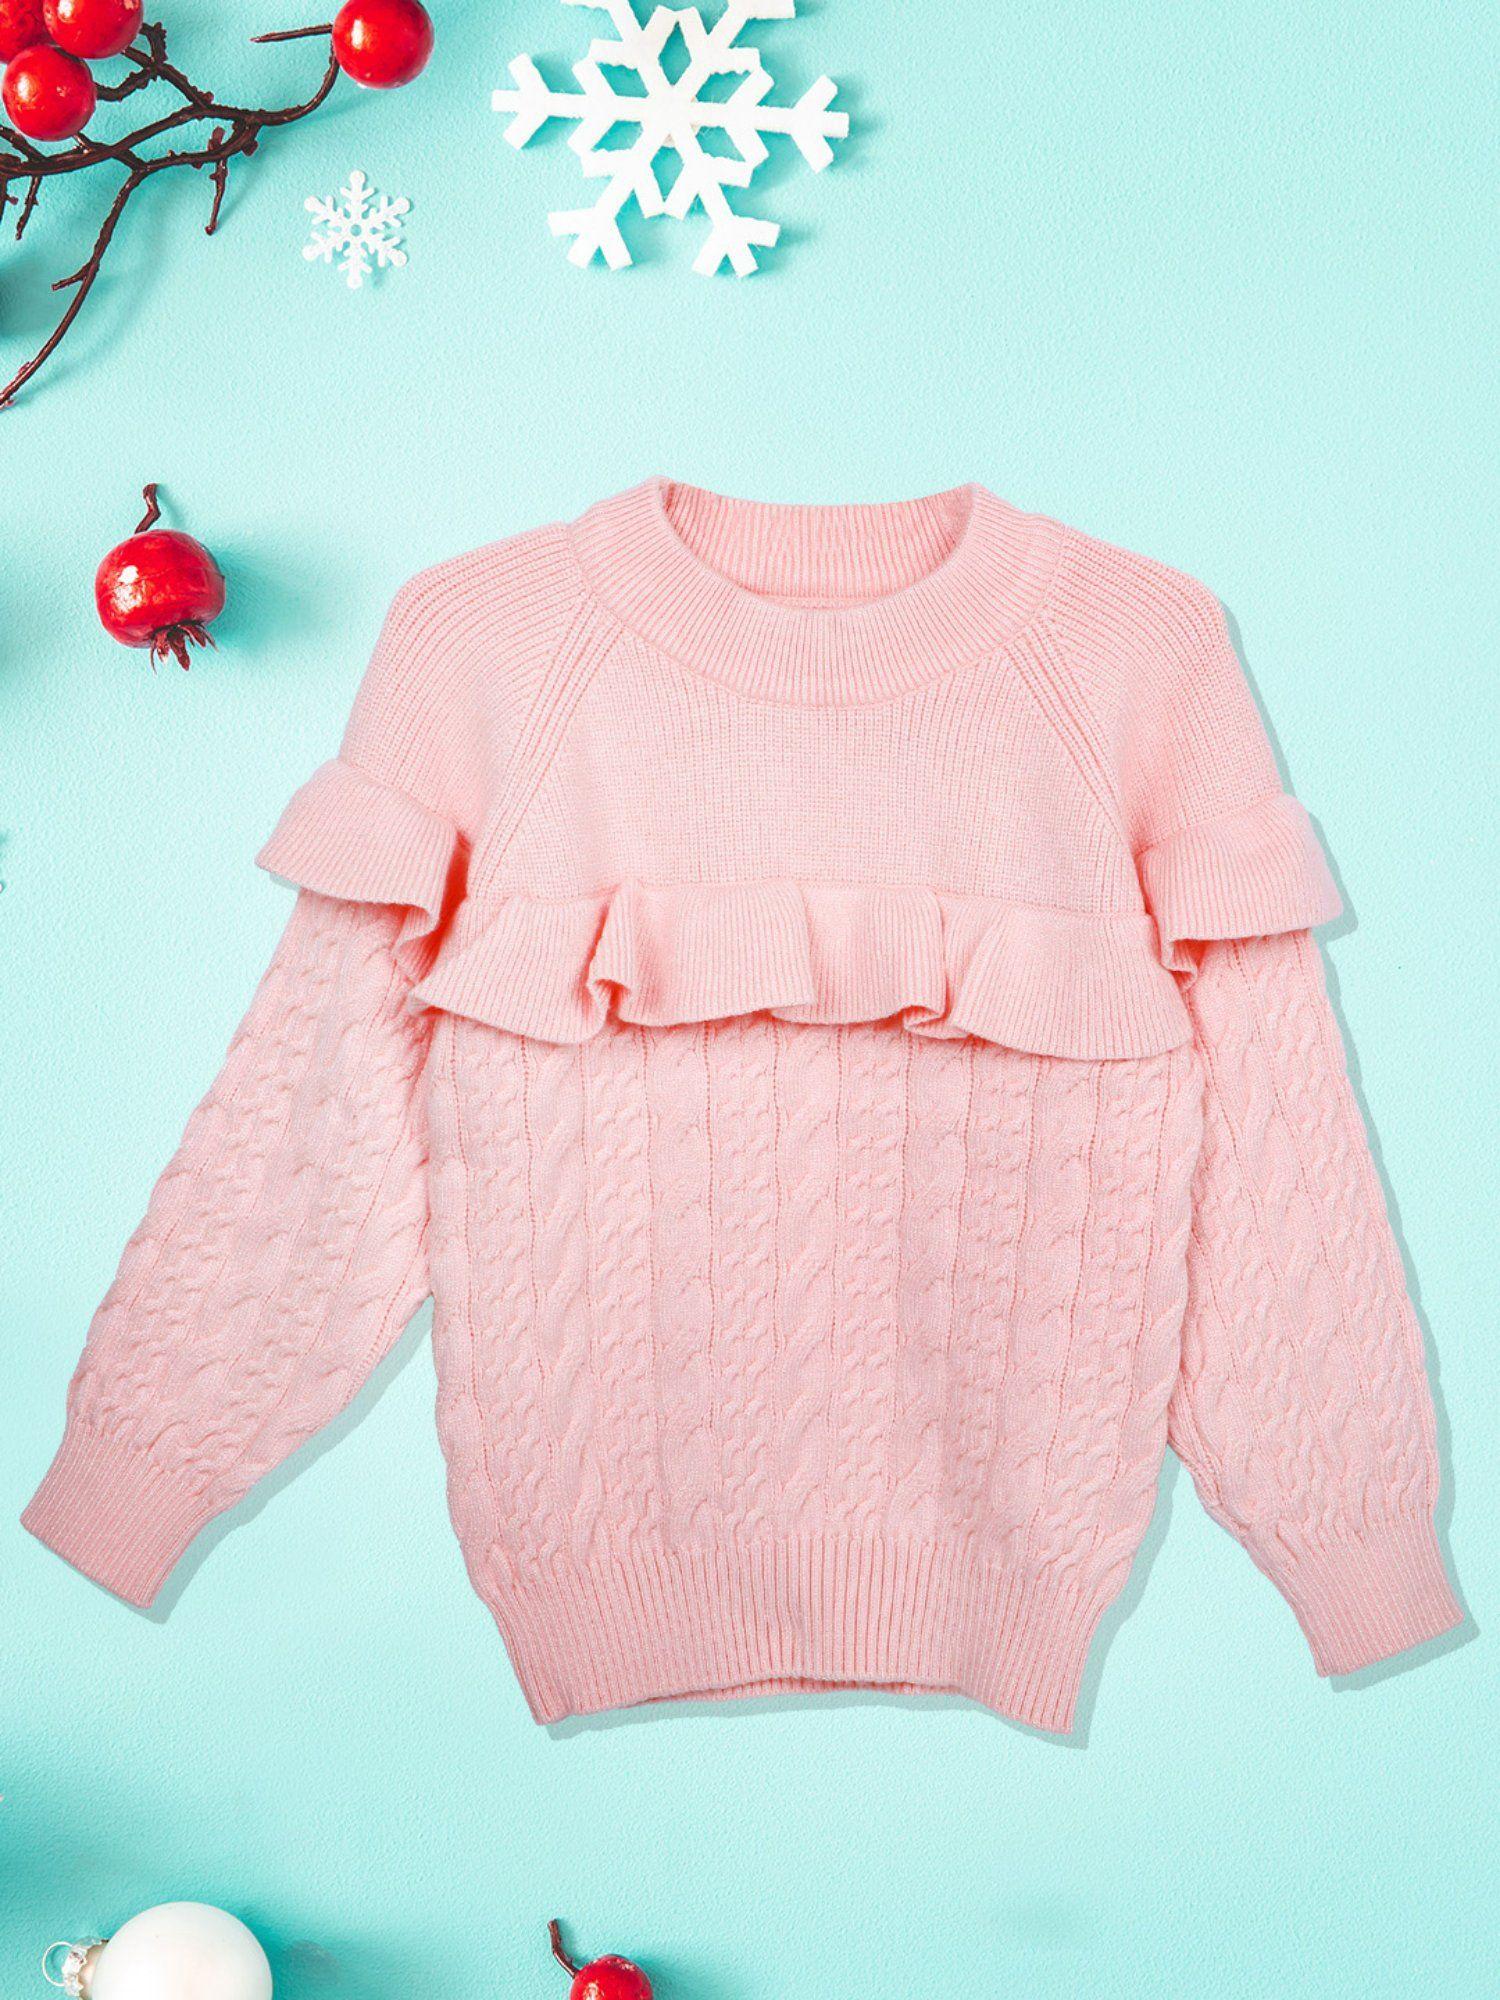 ruffled jumper premium full sleeves braided knit sweater pink